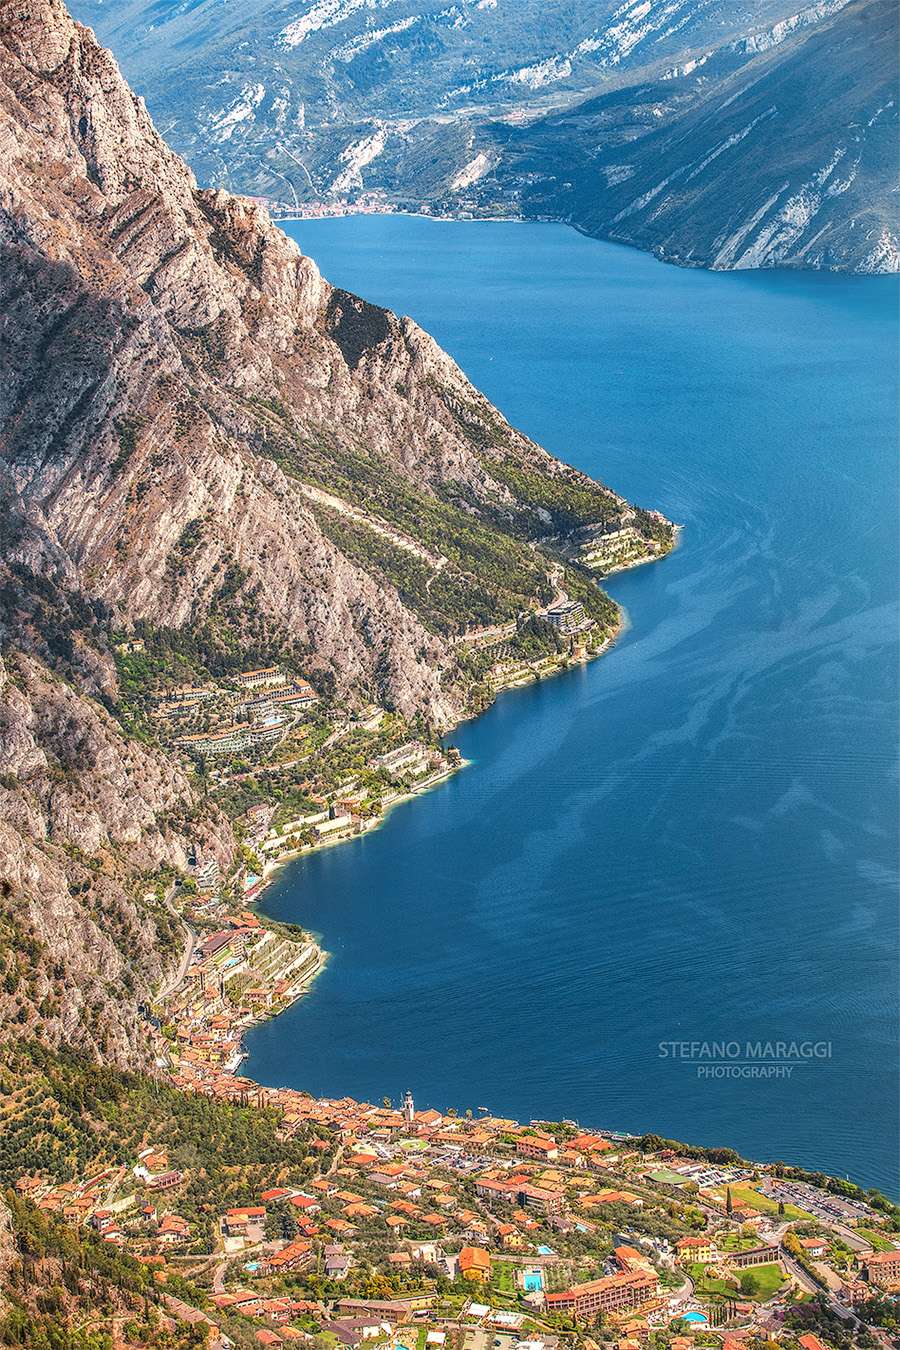 Trekking to Monte Bestone, an incredible view of the upper Lake Garda. 